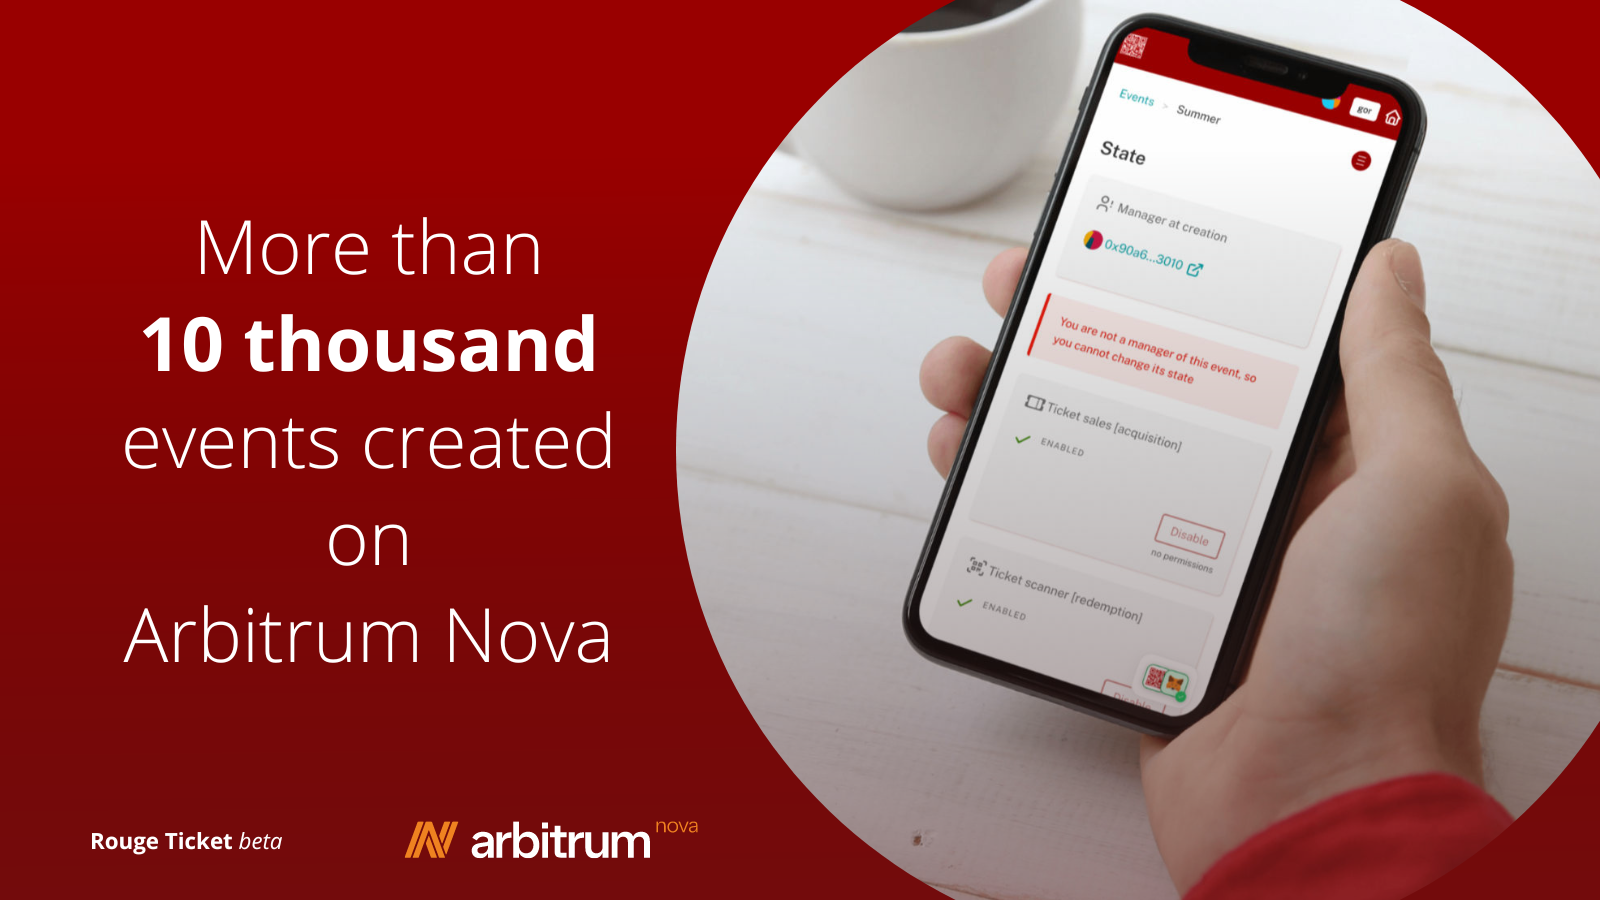 More than 16 thousand events created on Arbitrum Nova!